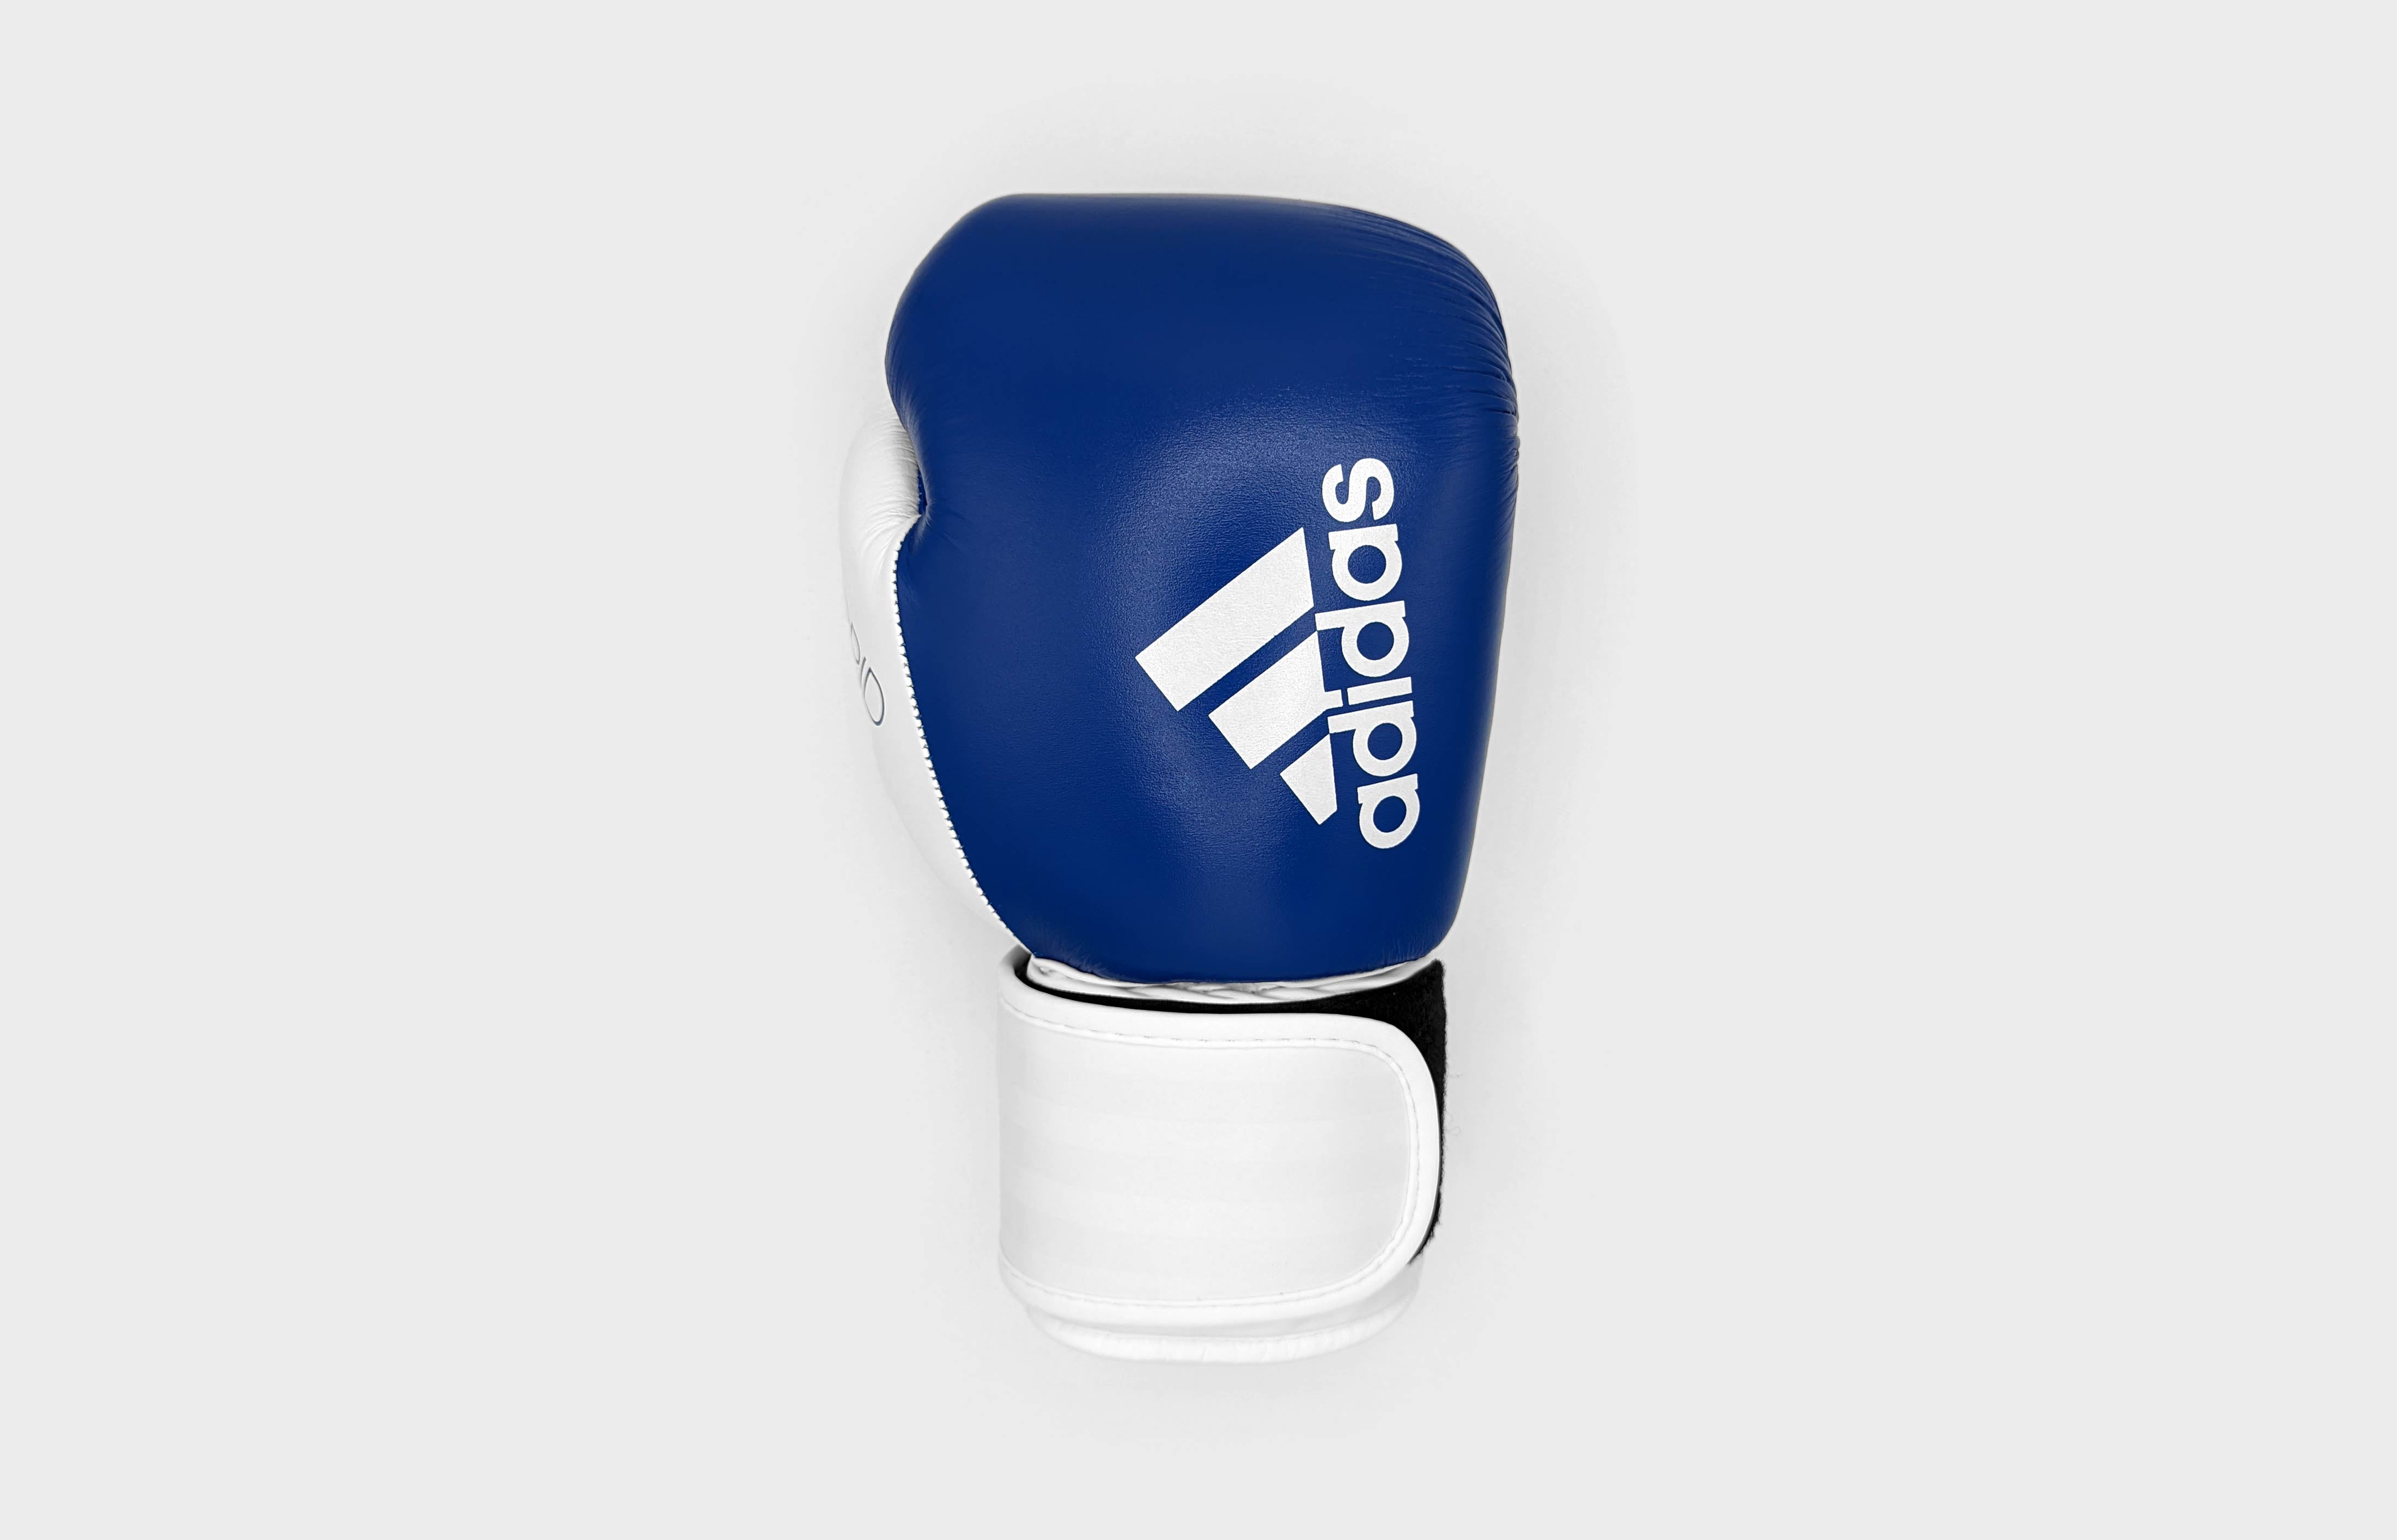 Adidas Hybrid 200 Boxing Gloves